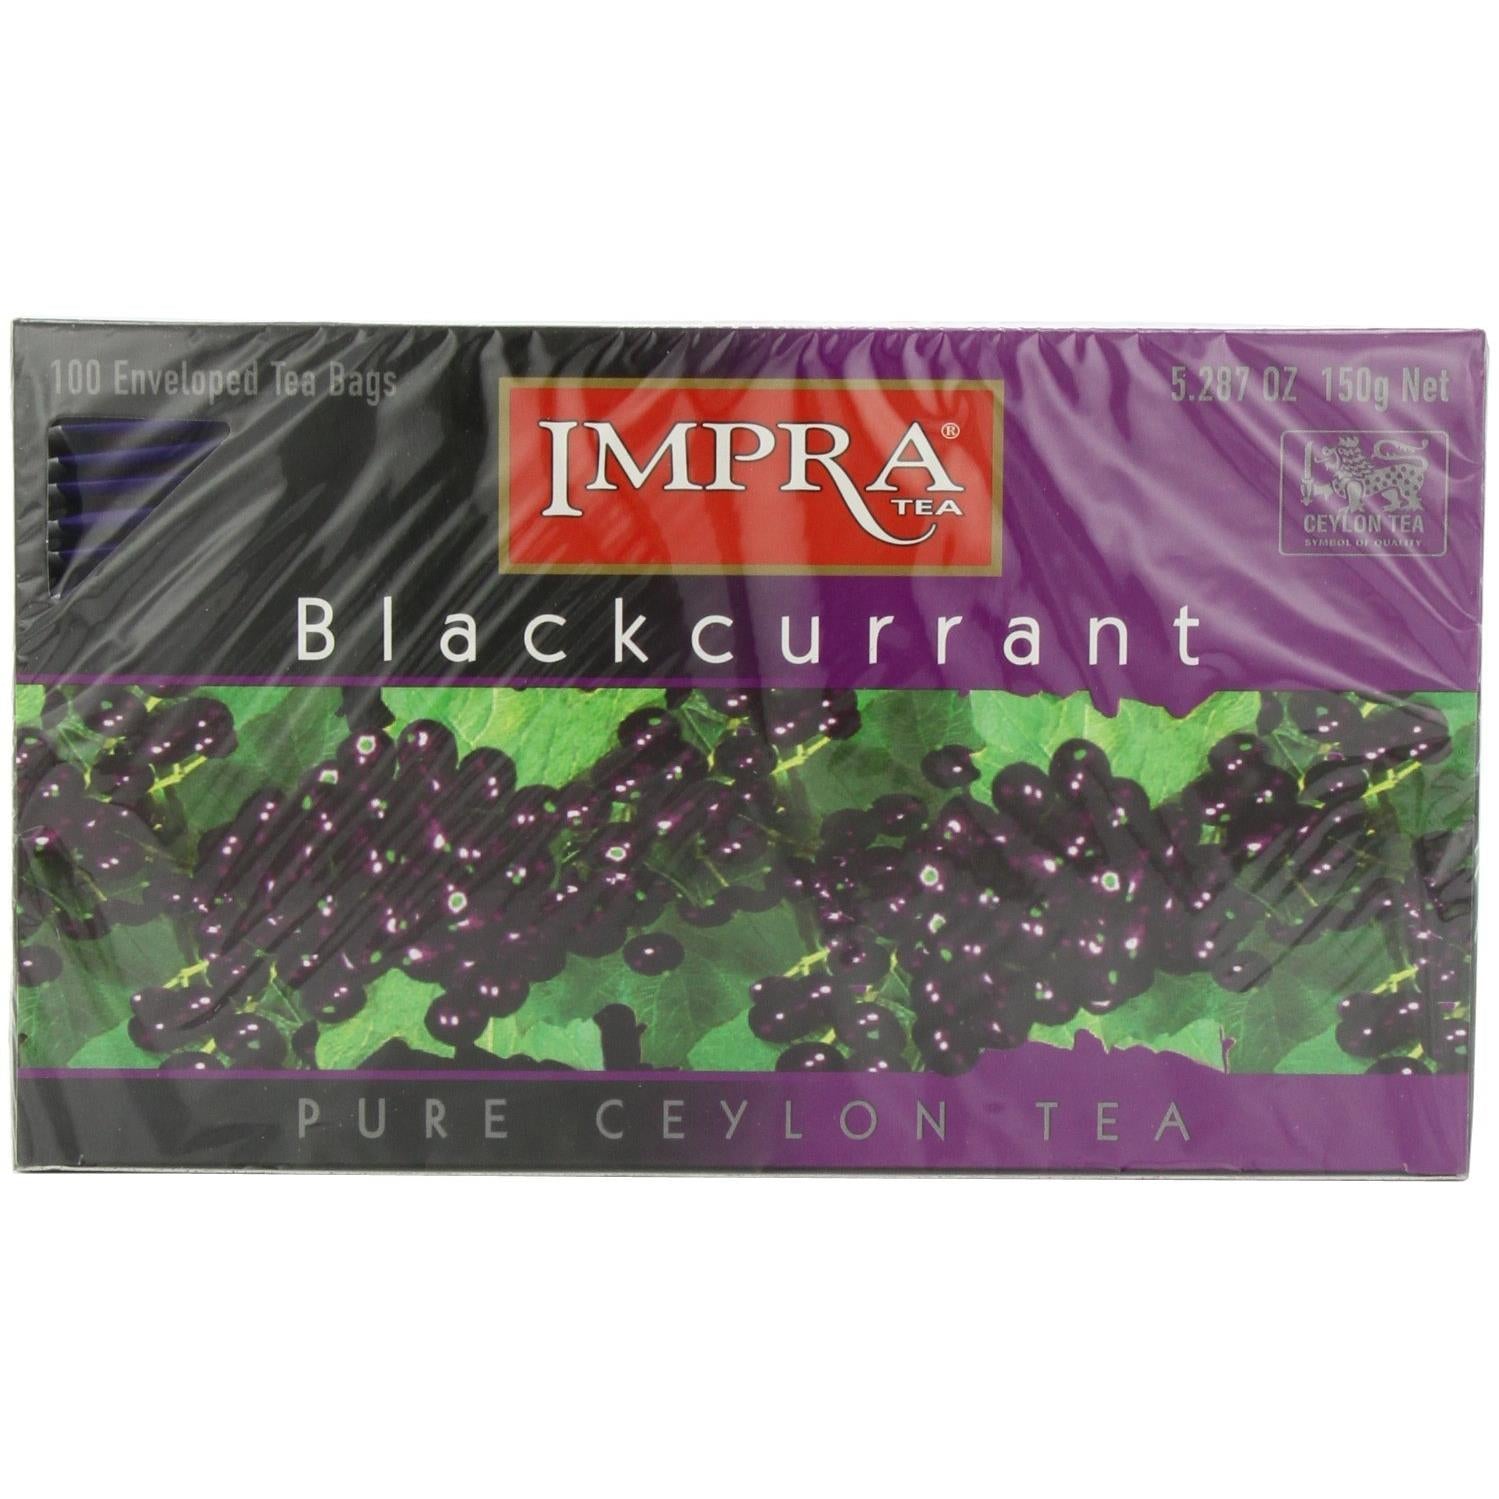 Impra Blackcurrant Pure Ceylon Tea Bags (100 Enveloped Tea Bags)